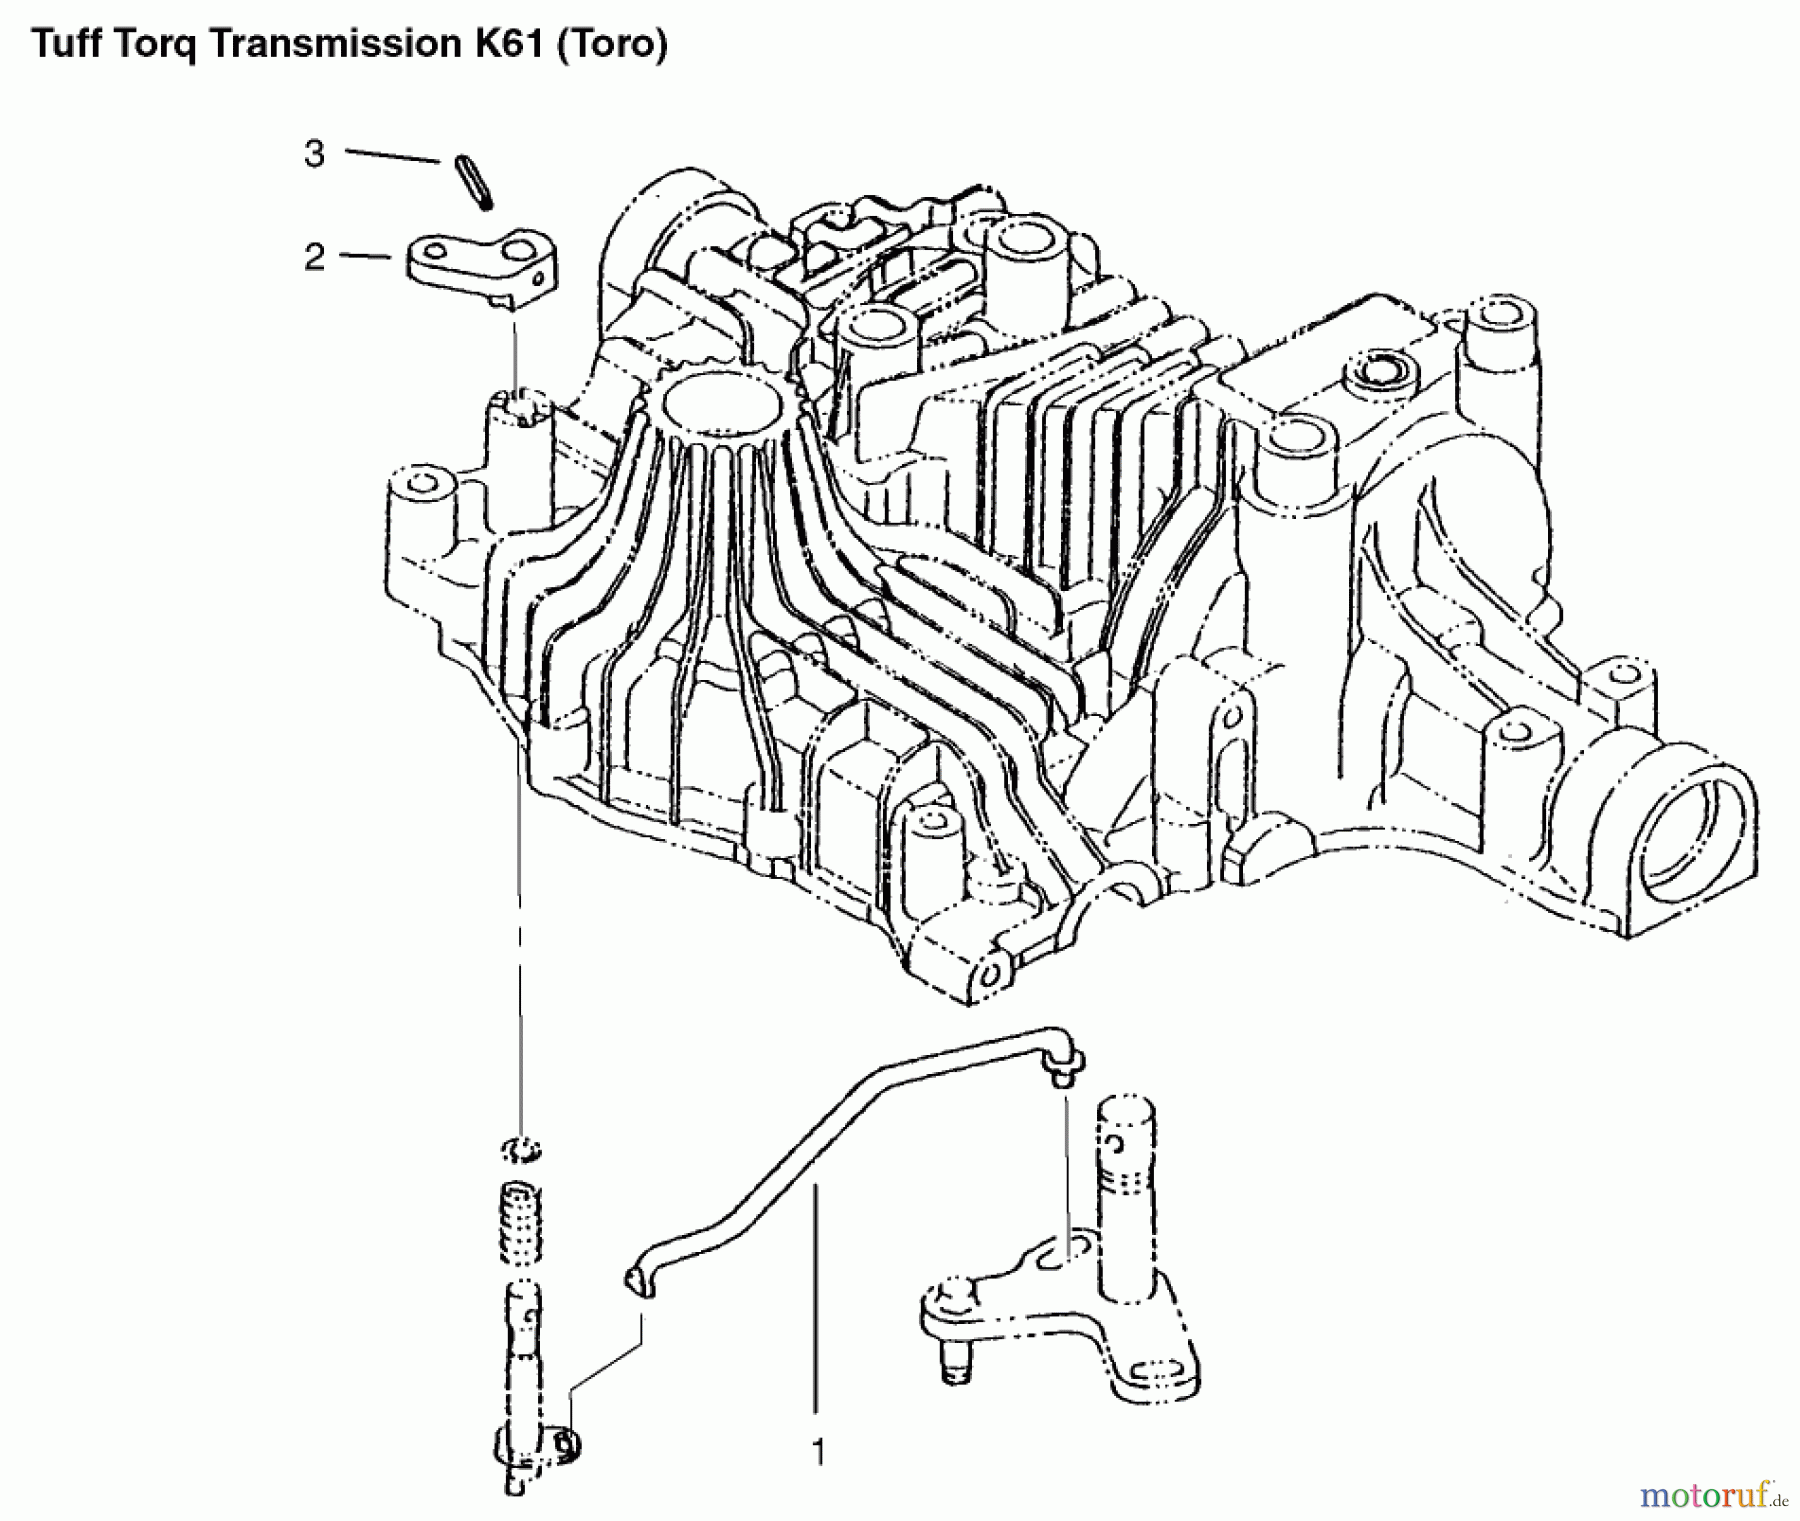  Toro Neu Mowers, Lawn & Garden Tractor Seite 1 72115 (270-H) - Toro 270-H Lawn and Garden Tractor, 1999 (9900001-9999999) BYPASS RETURN